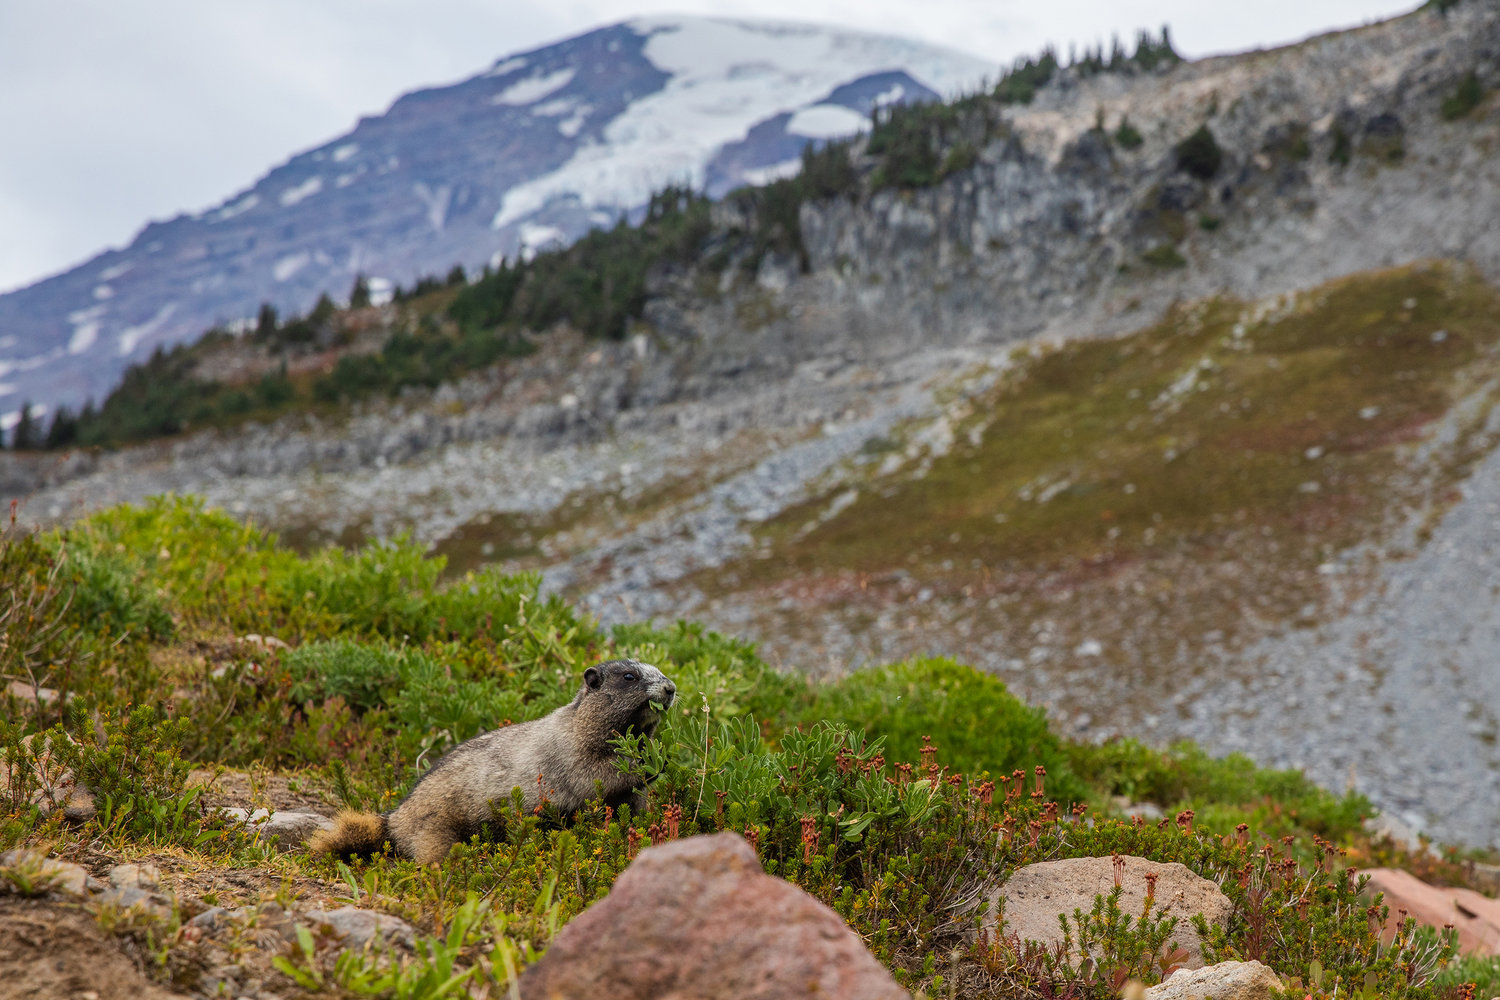 A marmot munches on vegetation in front of Mount Rainier on Wednesday near Ashford.